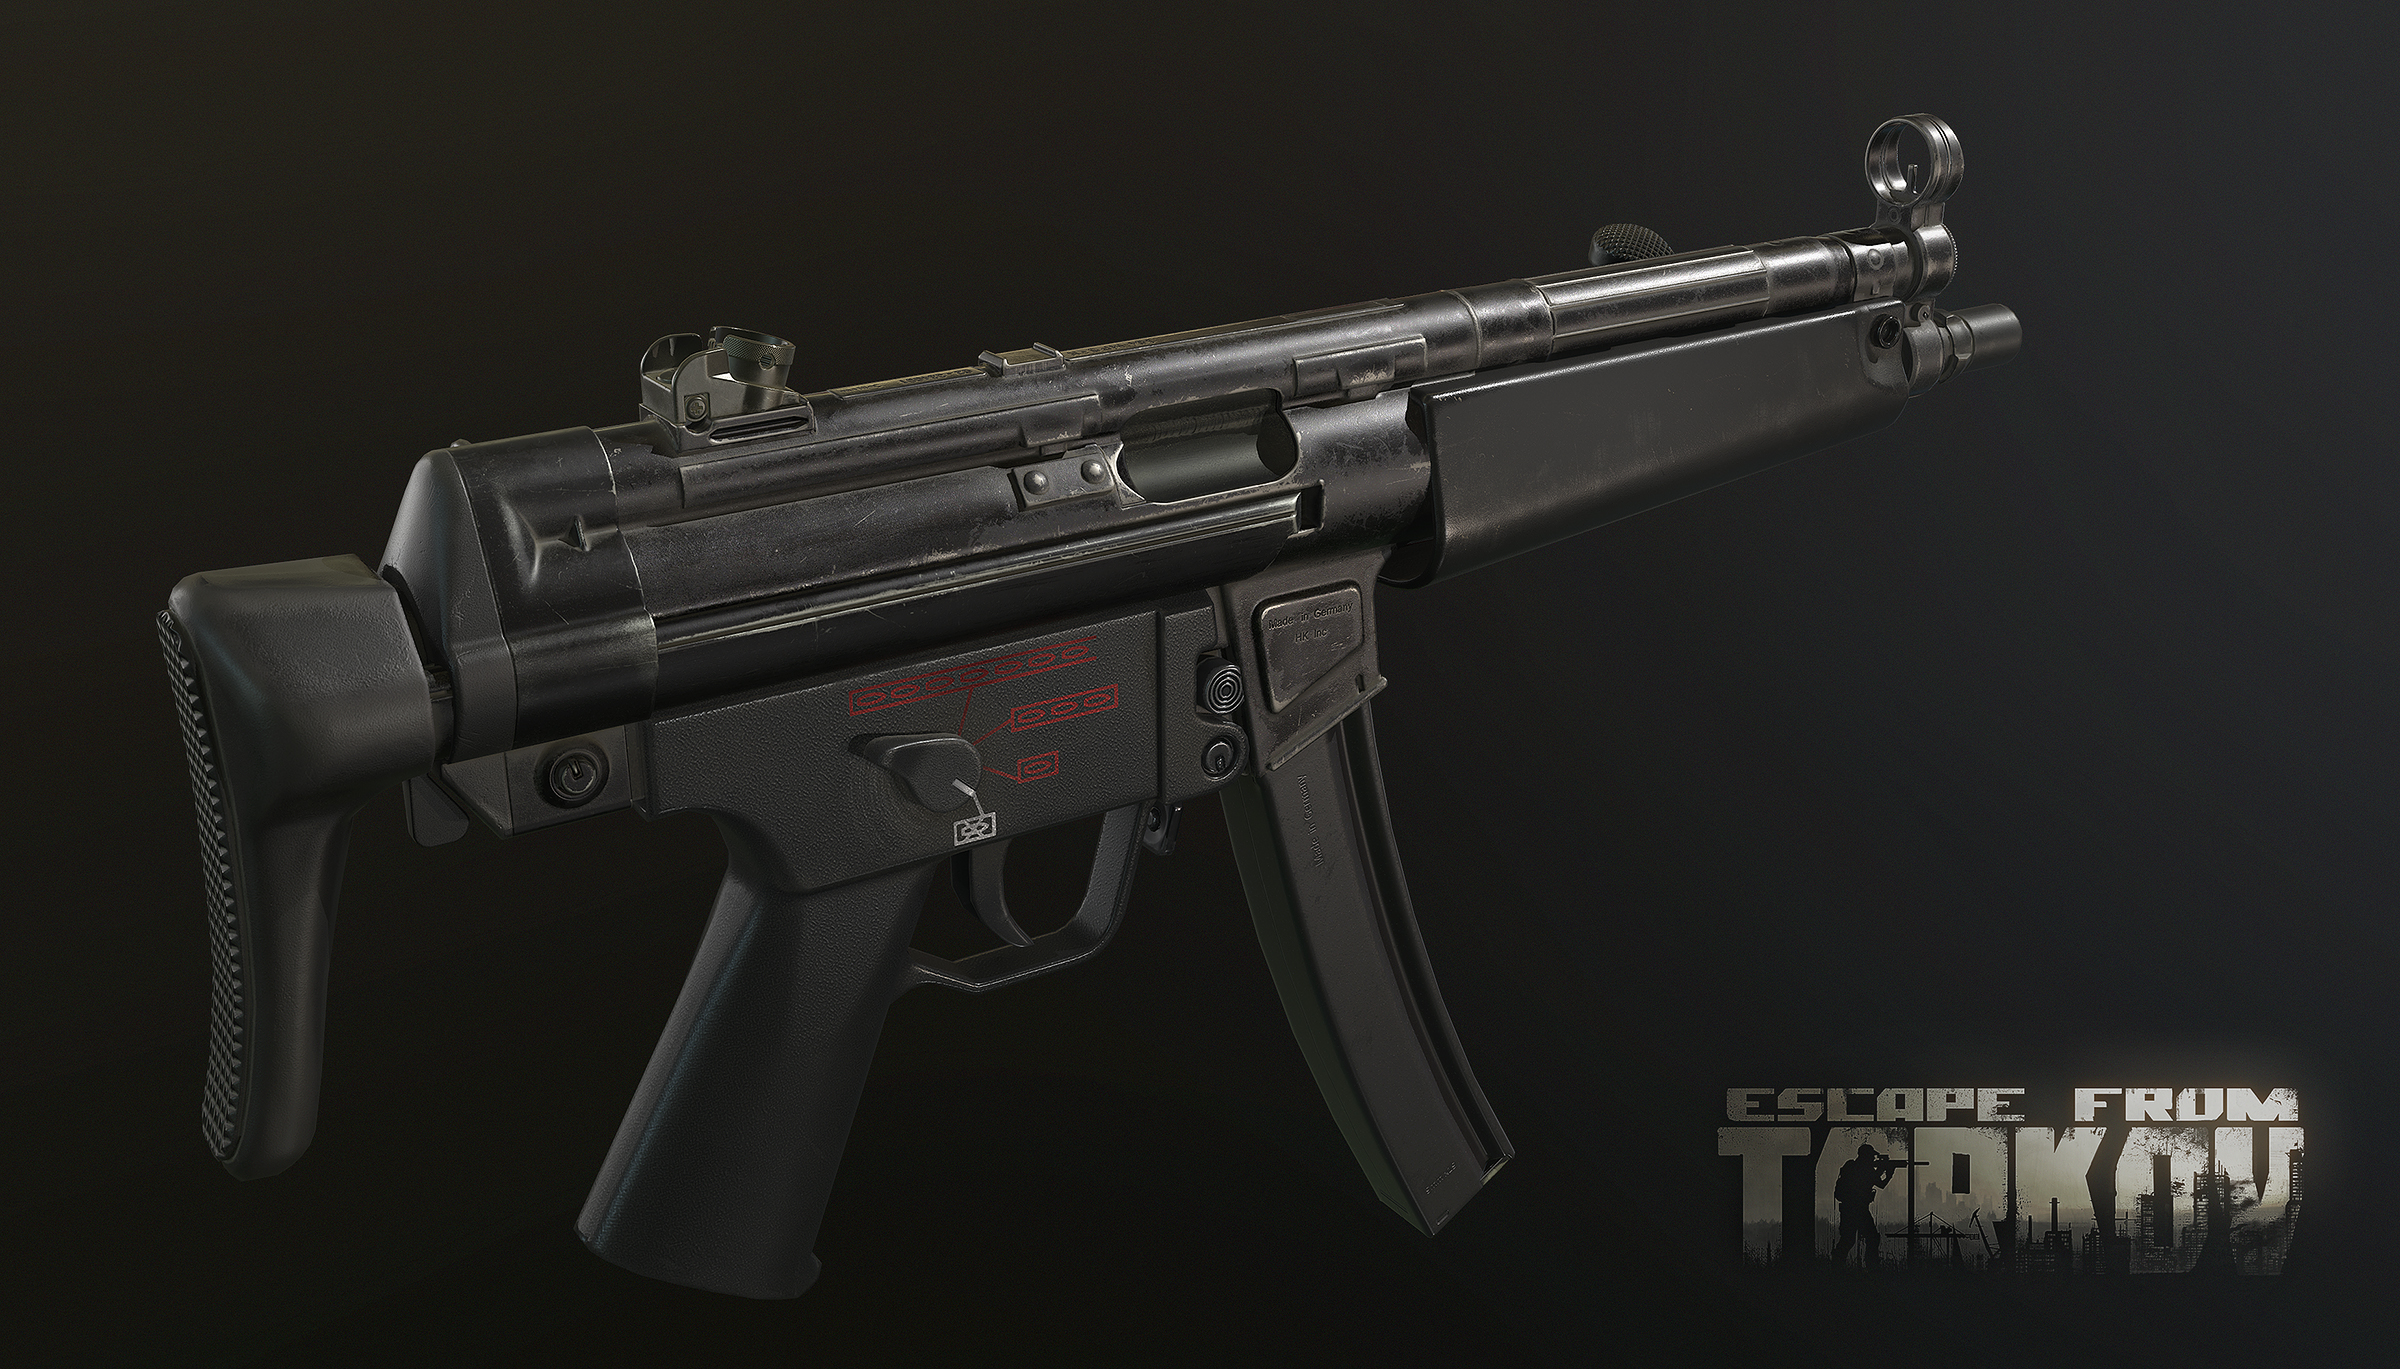 Escape from Tarkov 《逃离塔科夫》截图：HK MP5 冲锋枪及其变型 - 5